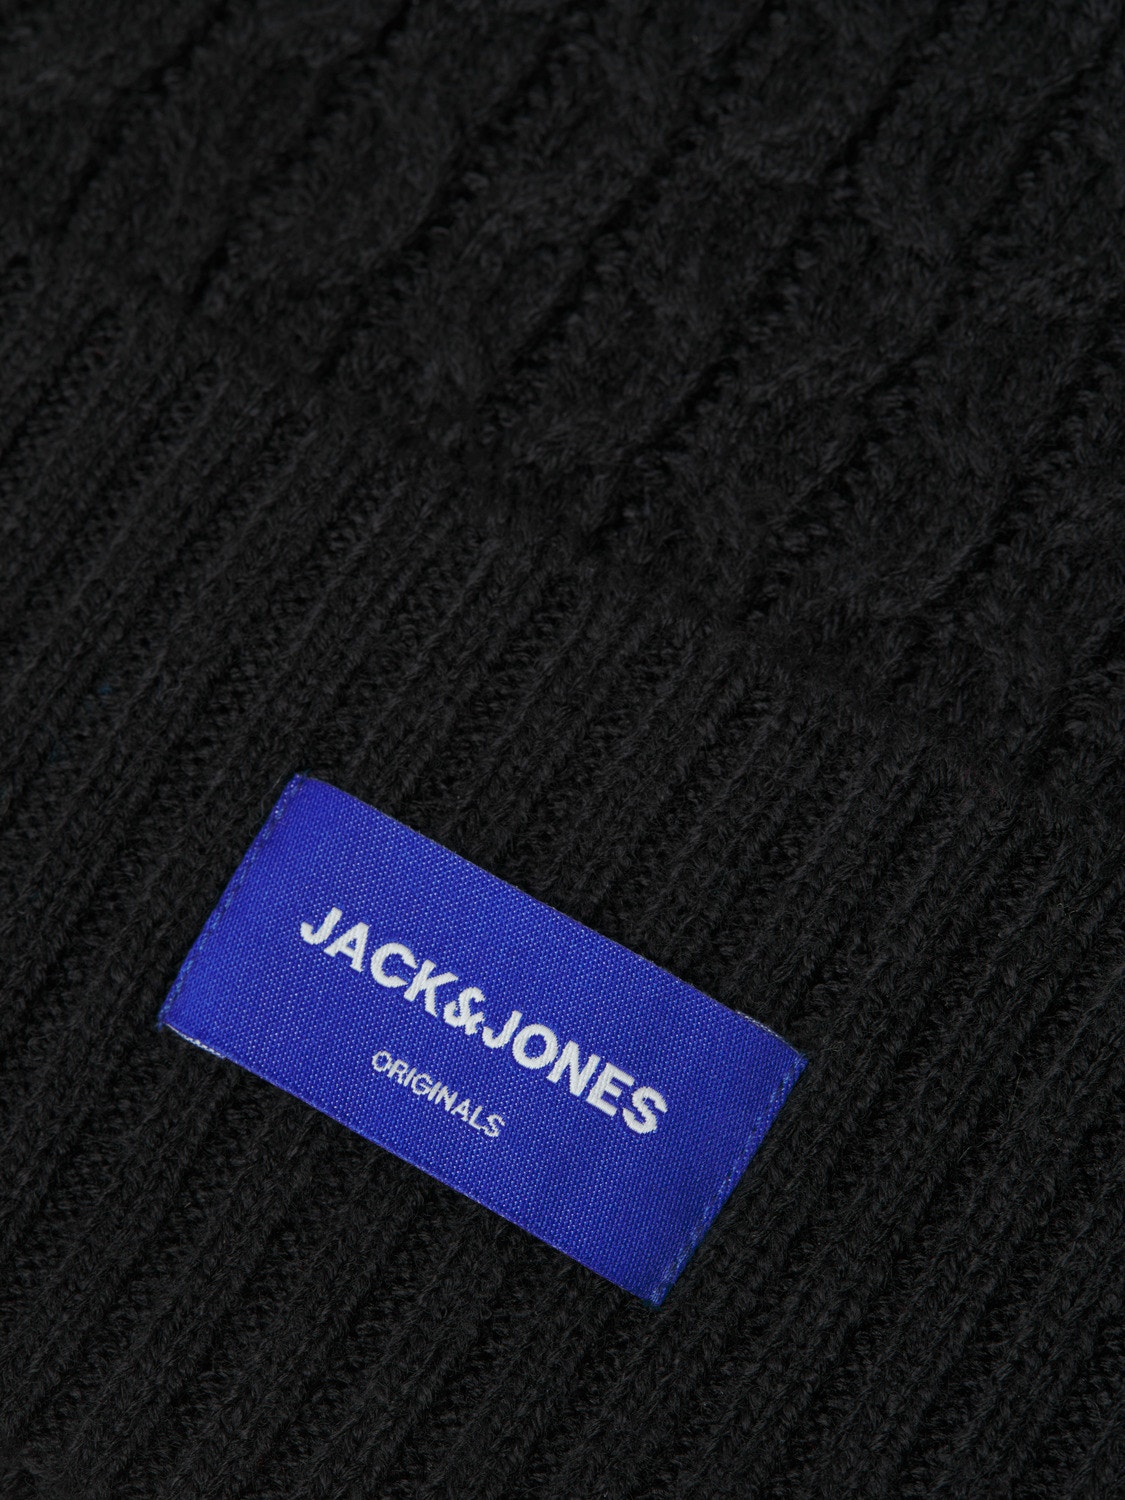 Jack & Jones Beanie -Black - 12247260